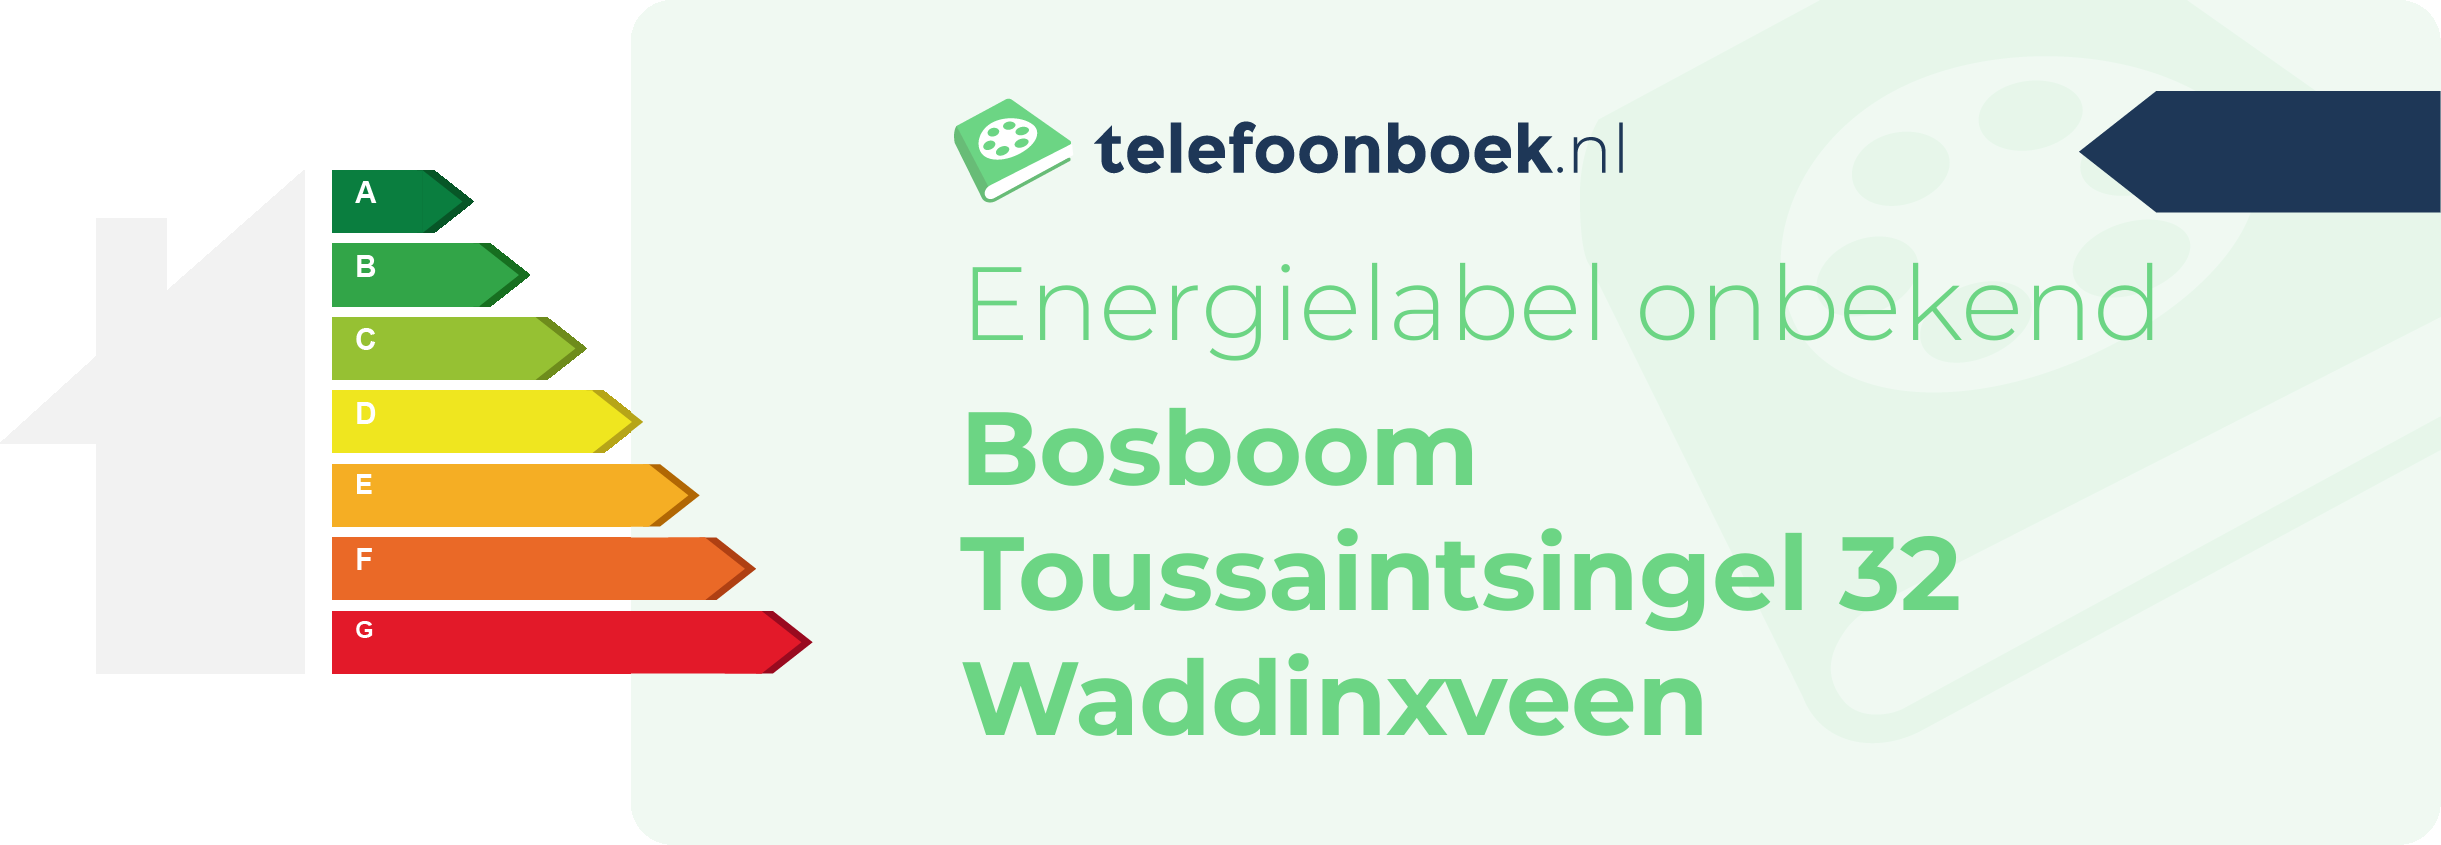 Energielabel Bosboom Toussaintsingel 32 Waddinxveen